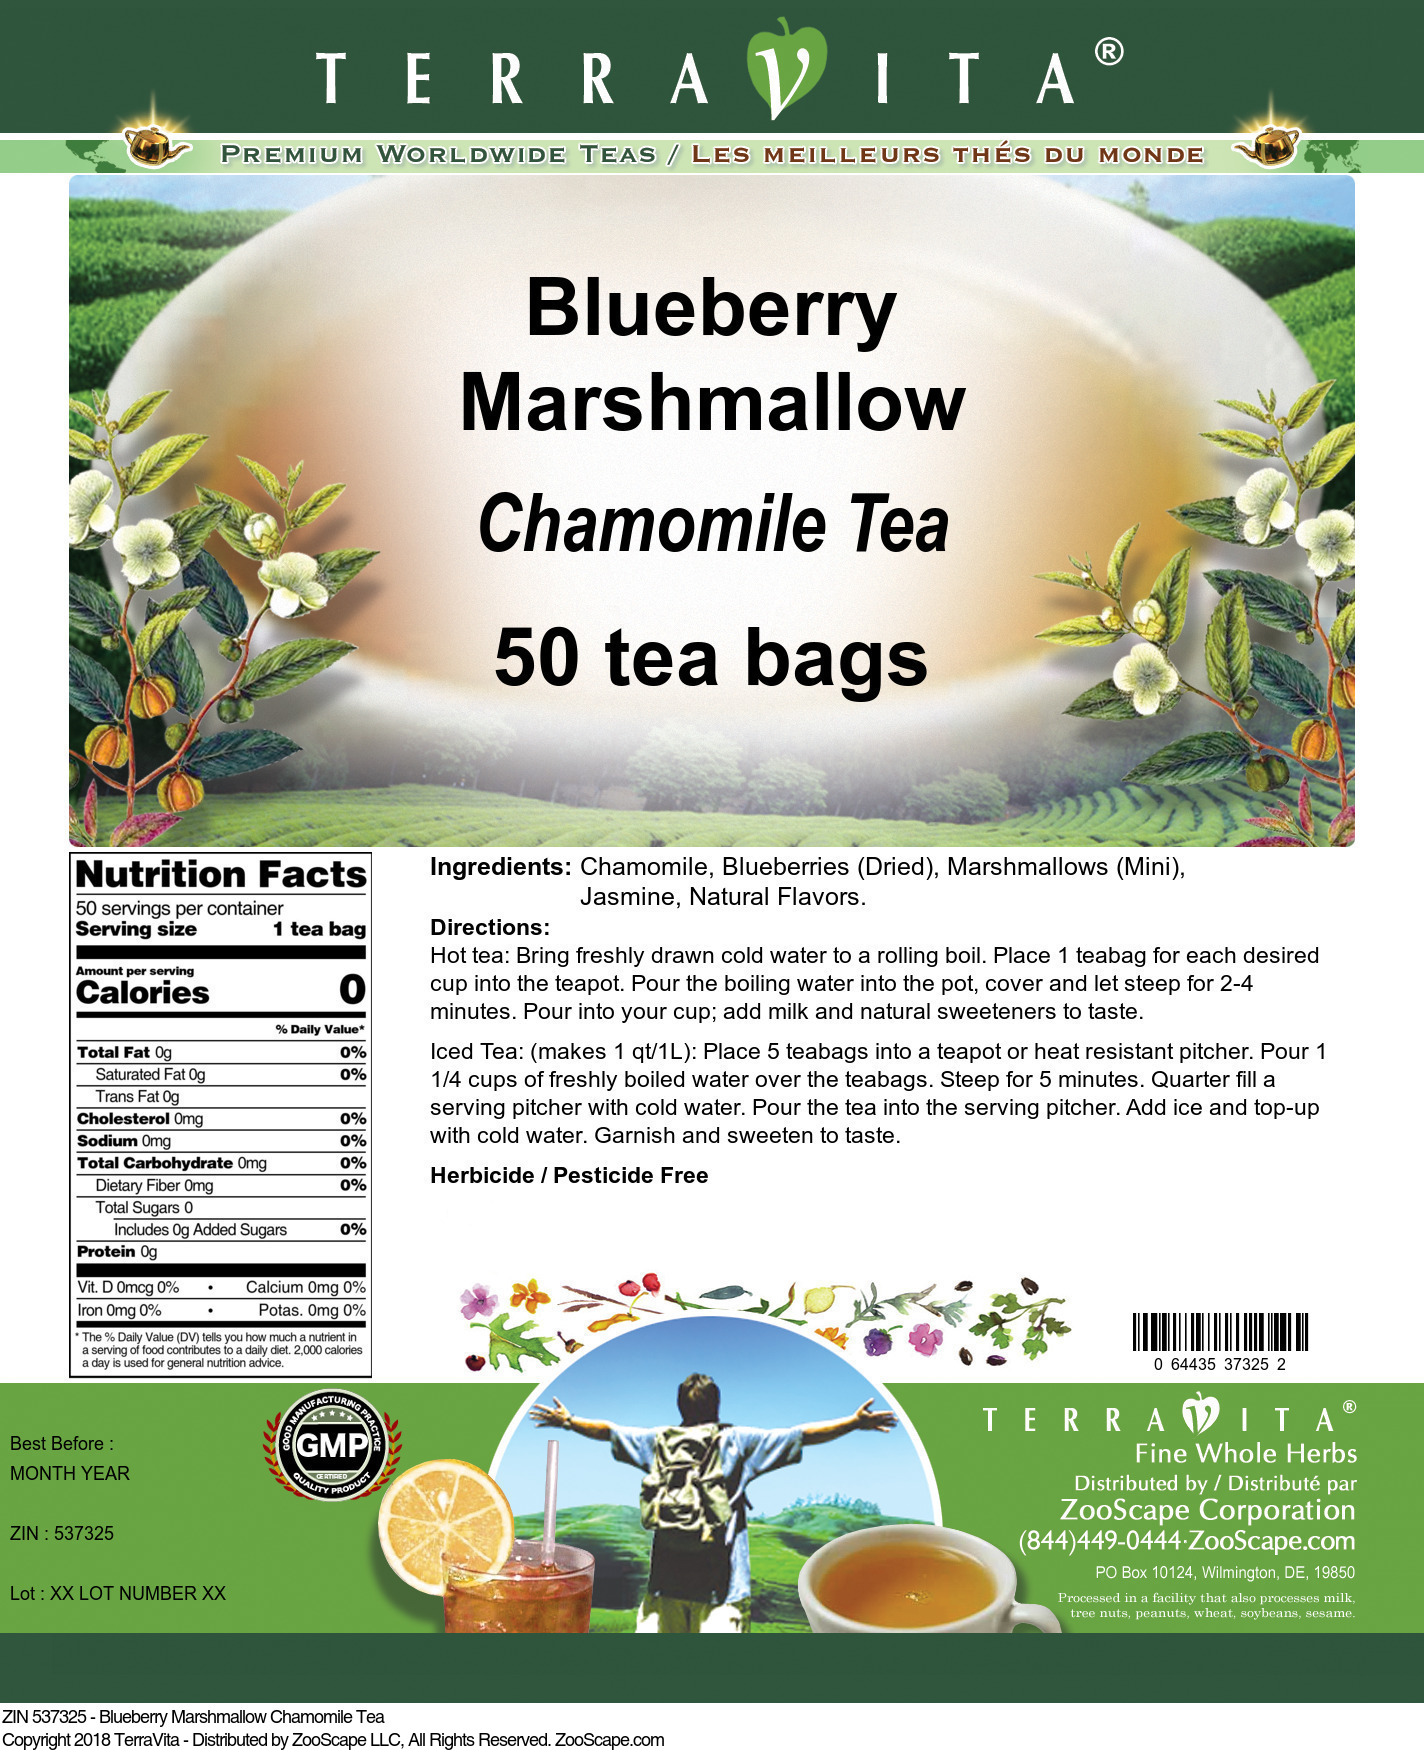 Blueberry Marshmallow Chamomile Tea - Label